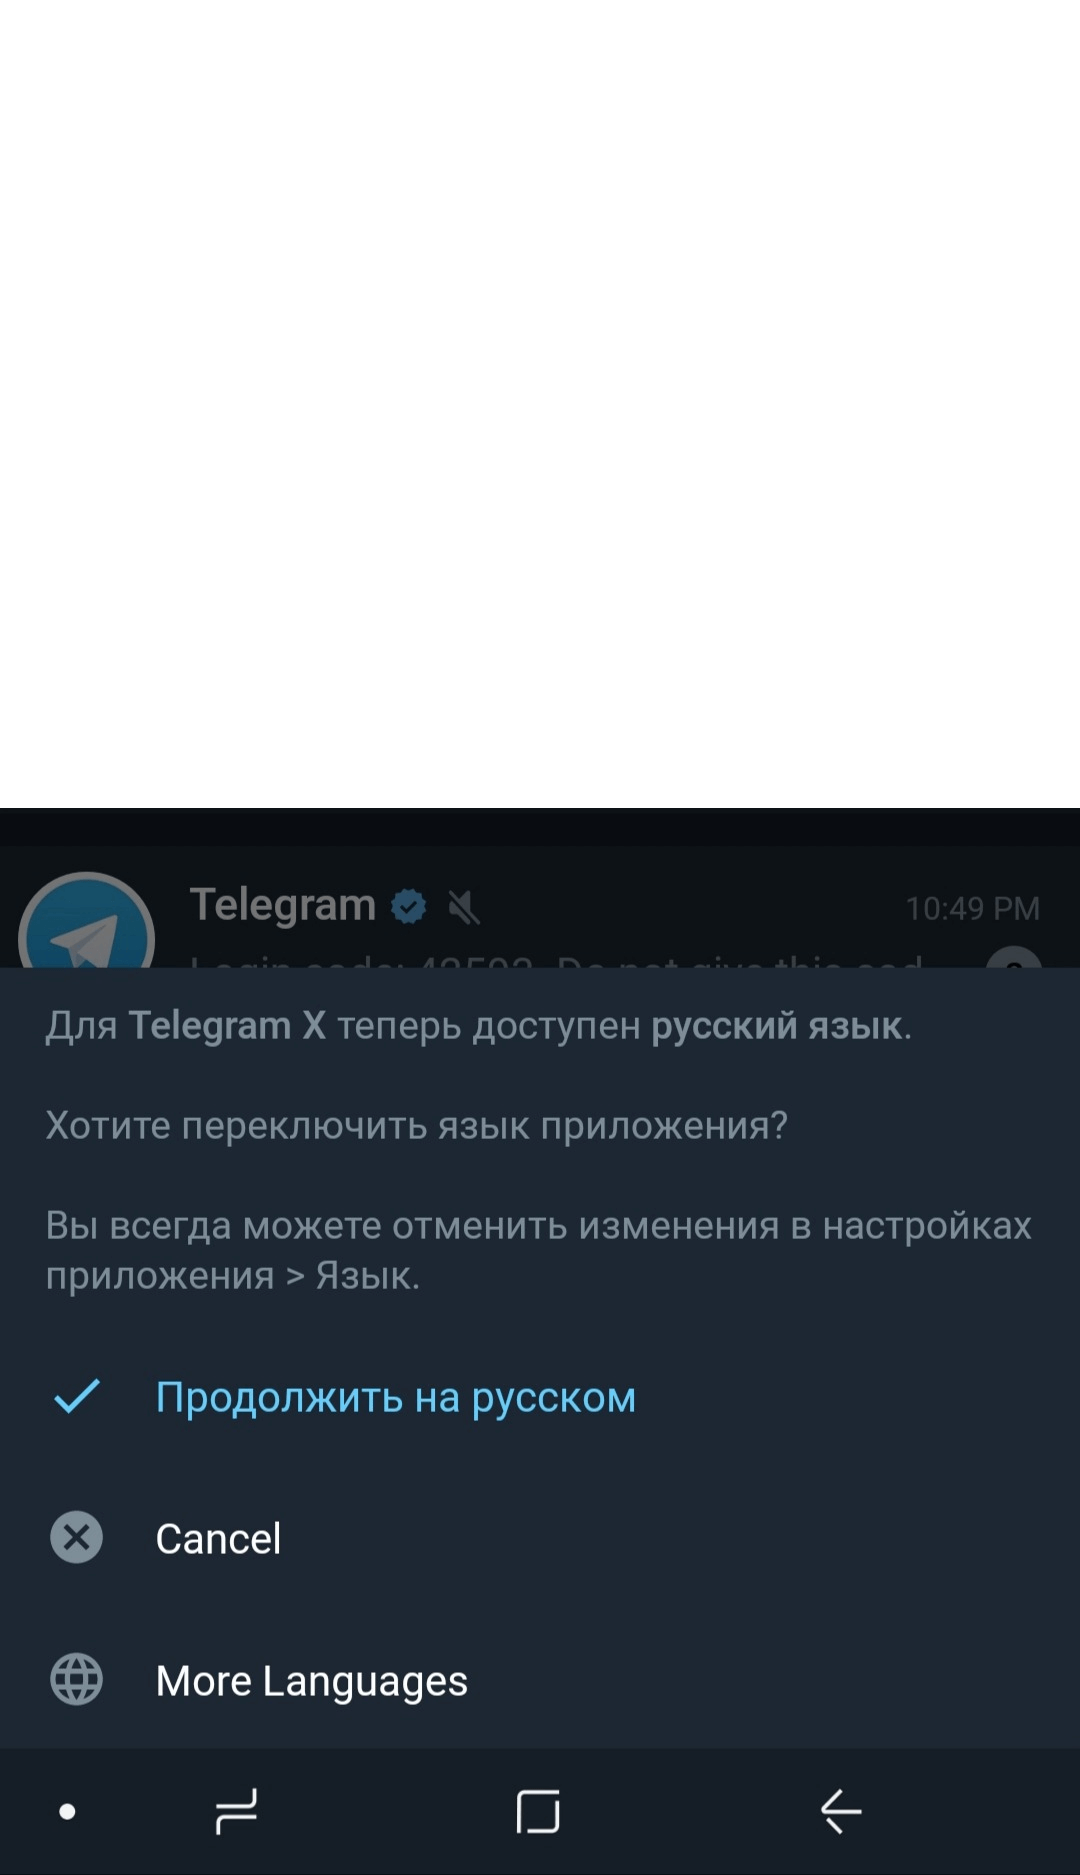 telegram-x-update-russian-2.png